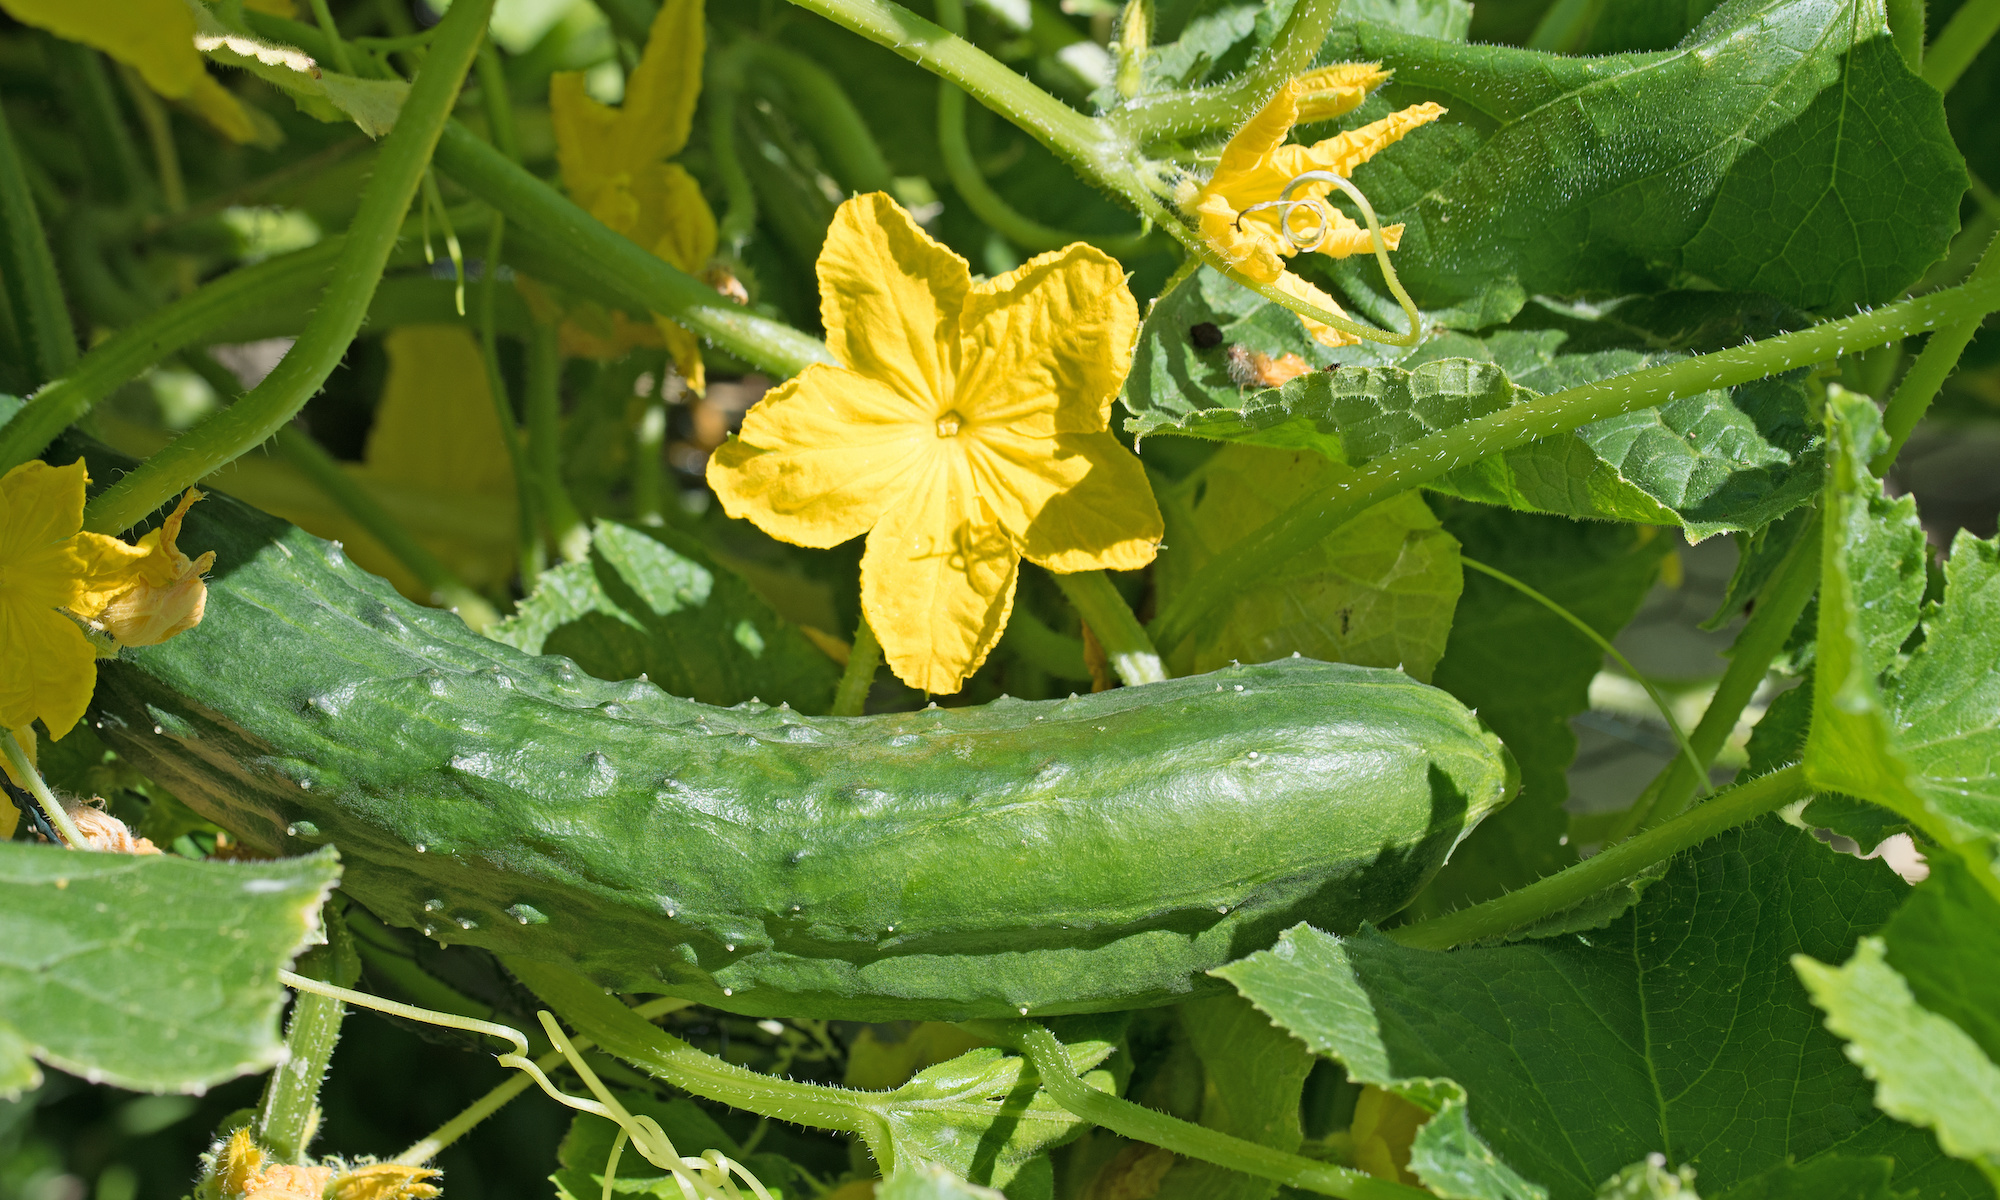 New breeding methods help against virus infestation - for example in cucumbers. (Image: Adobe Stock)